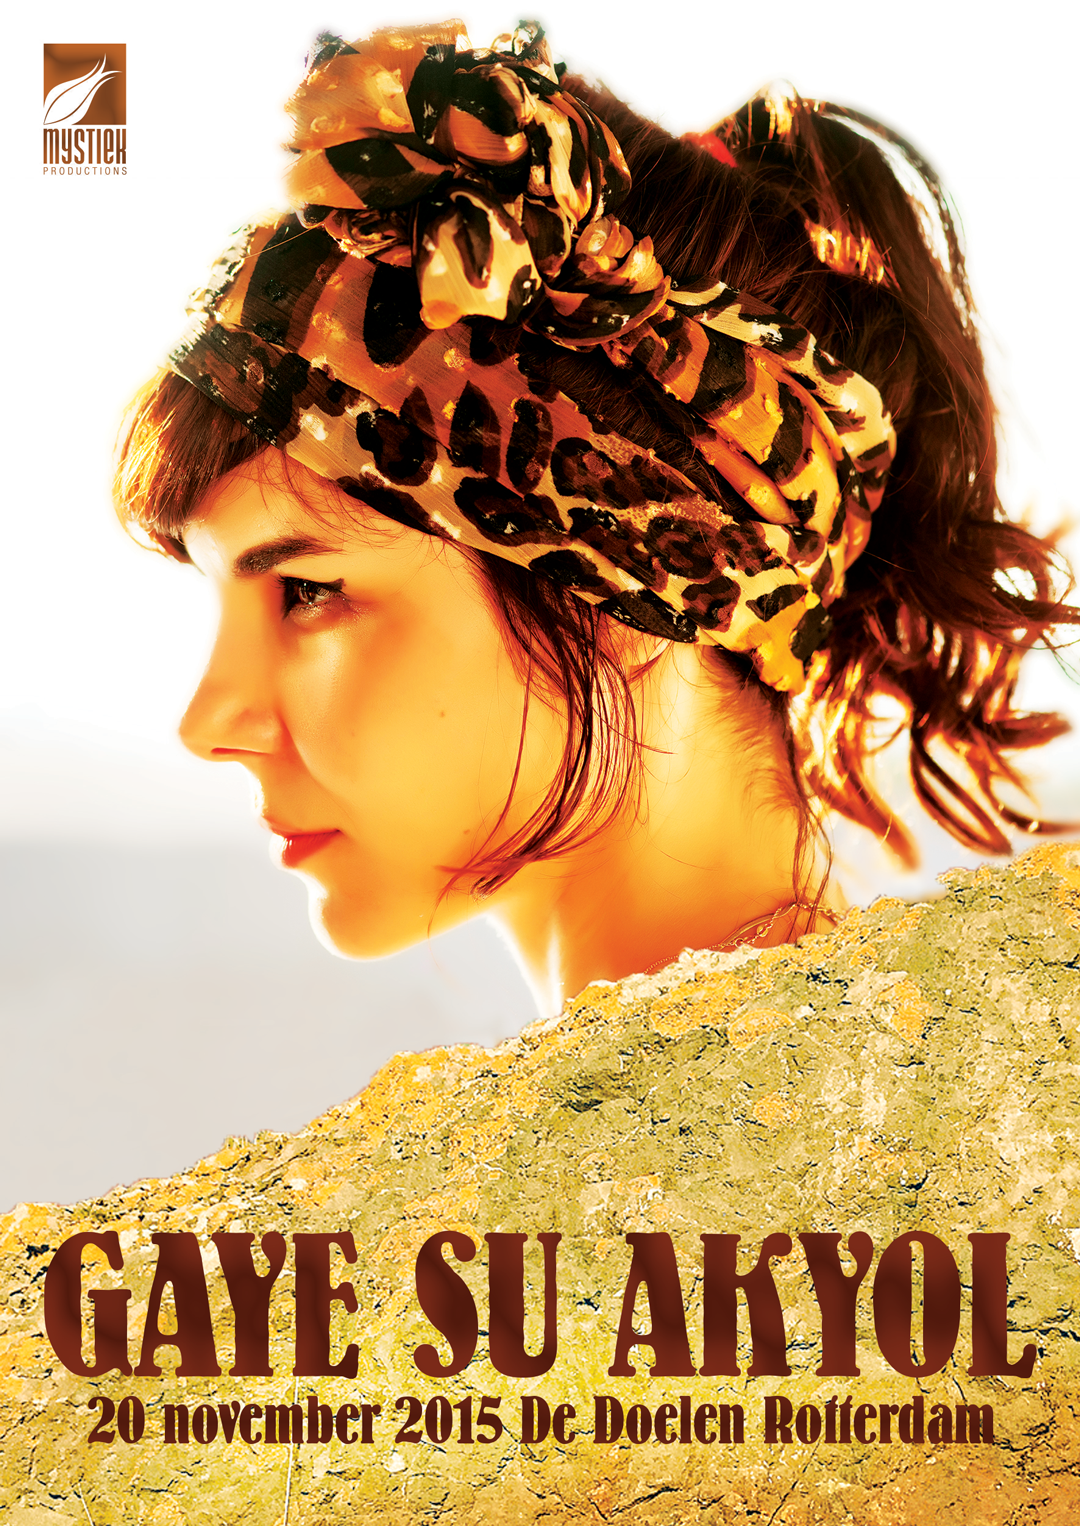 Gaye Su Akyol Mystiek Productions concert flyer poster